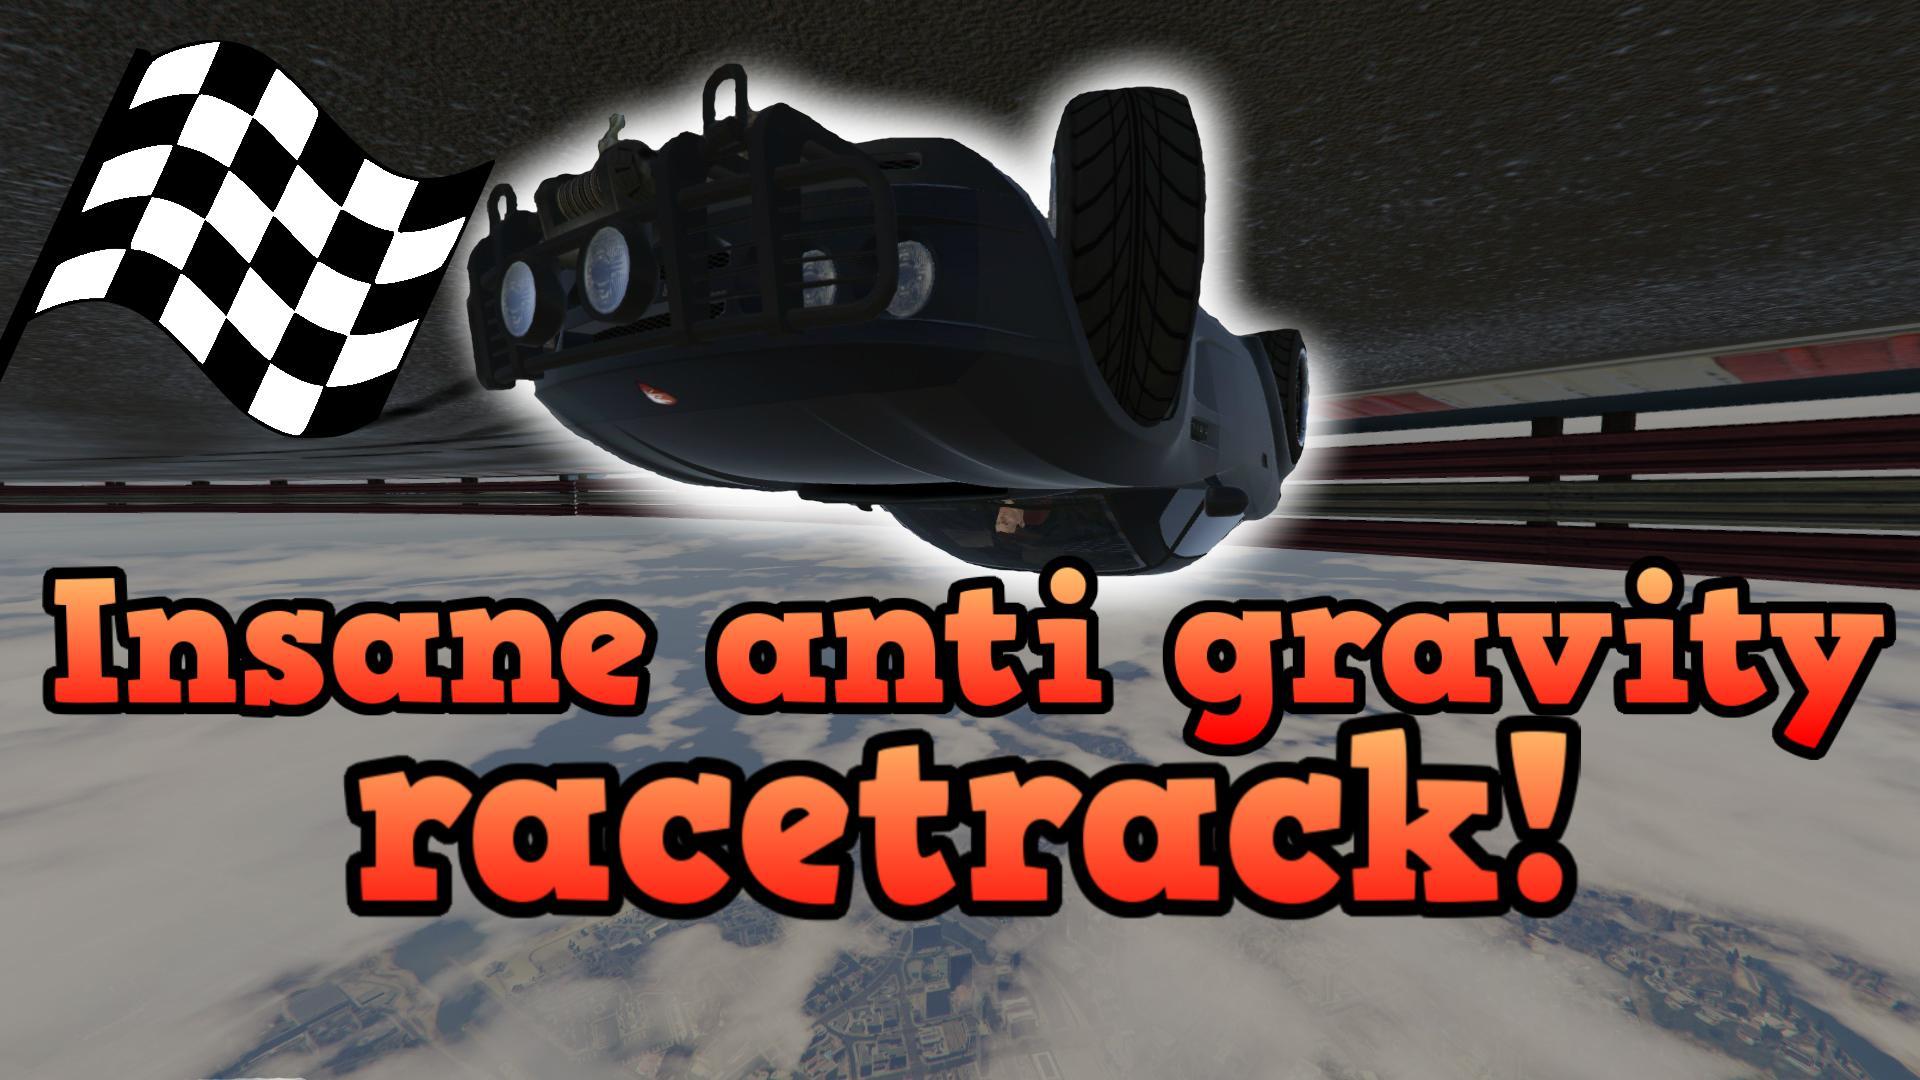 Insane anti gravity racetrack! (Spooner)